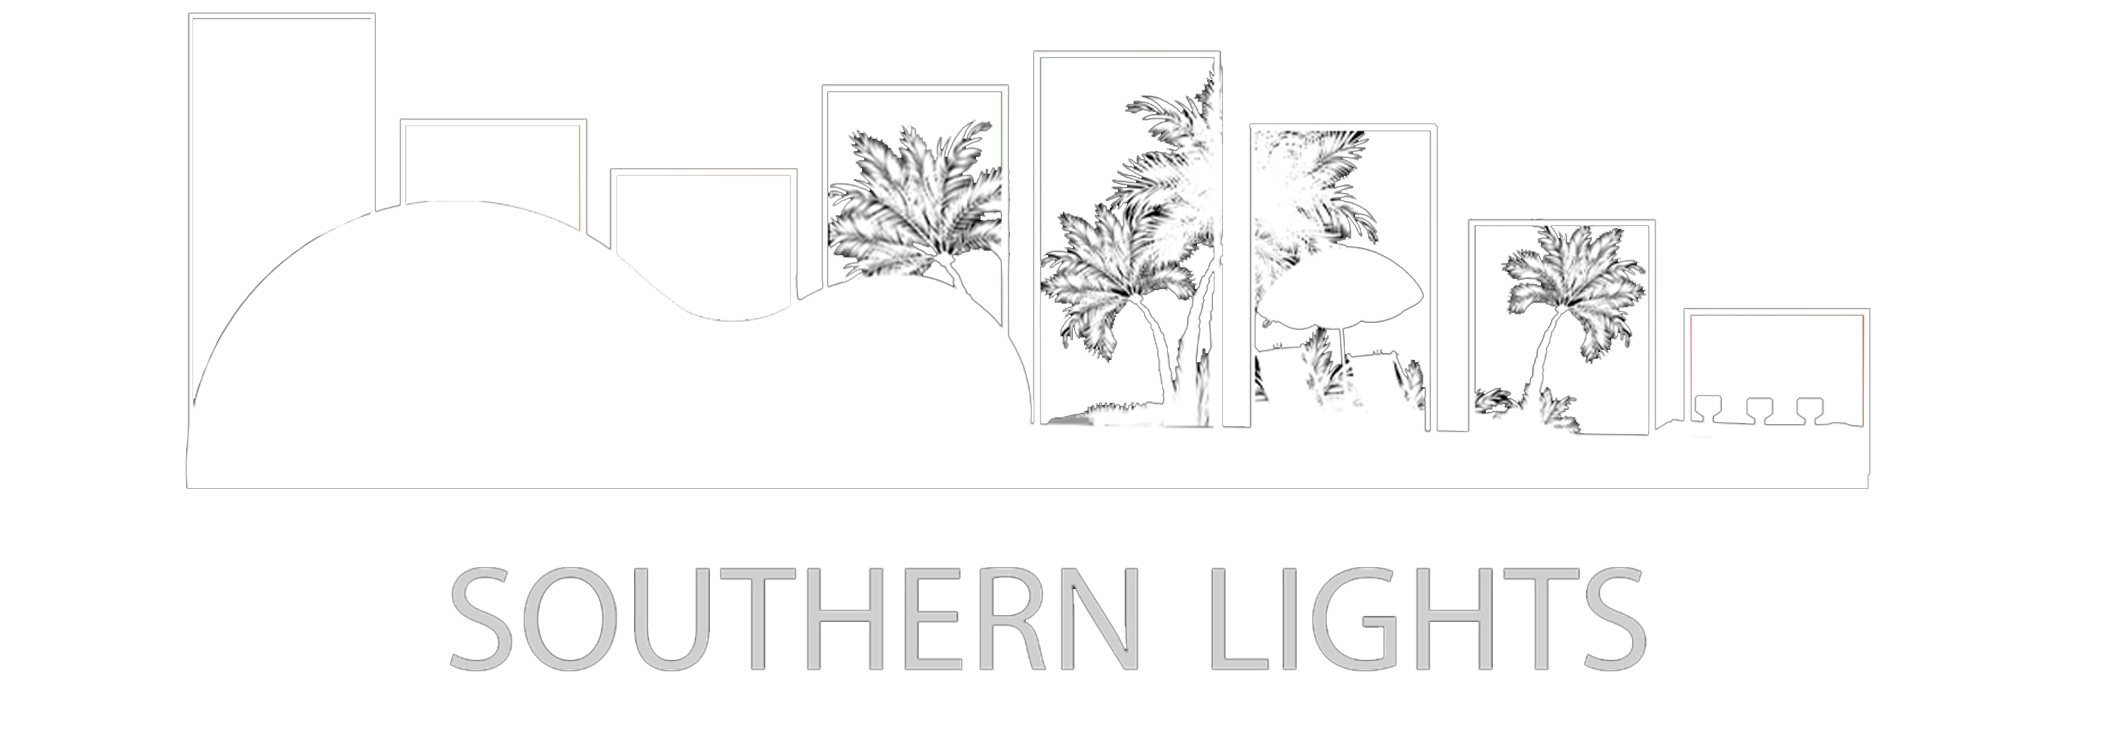 Southern Lights Band